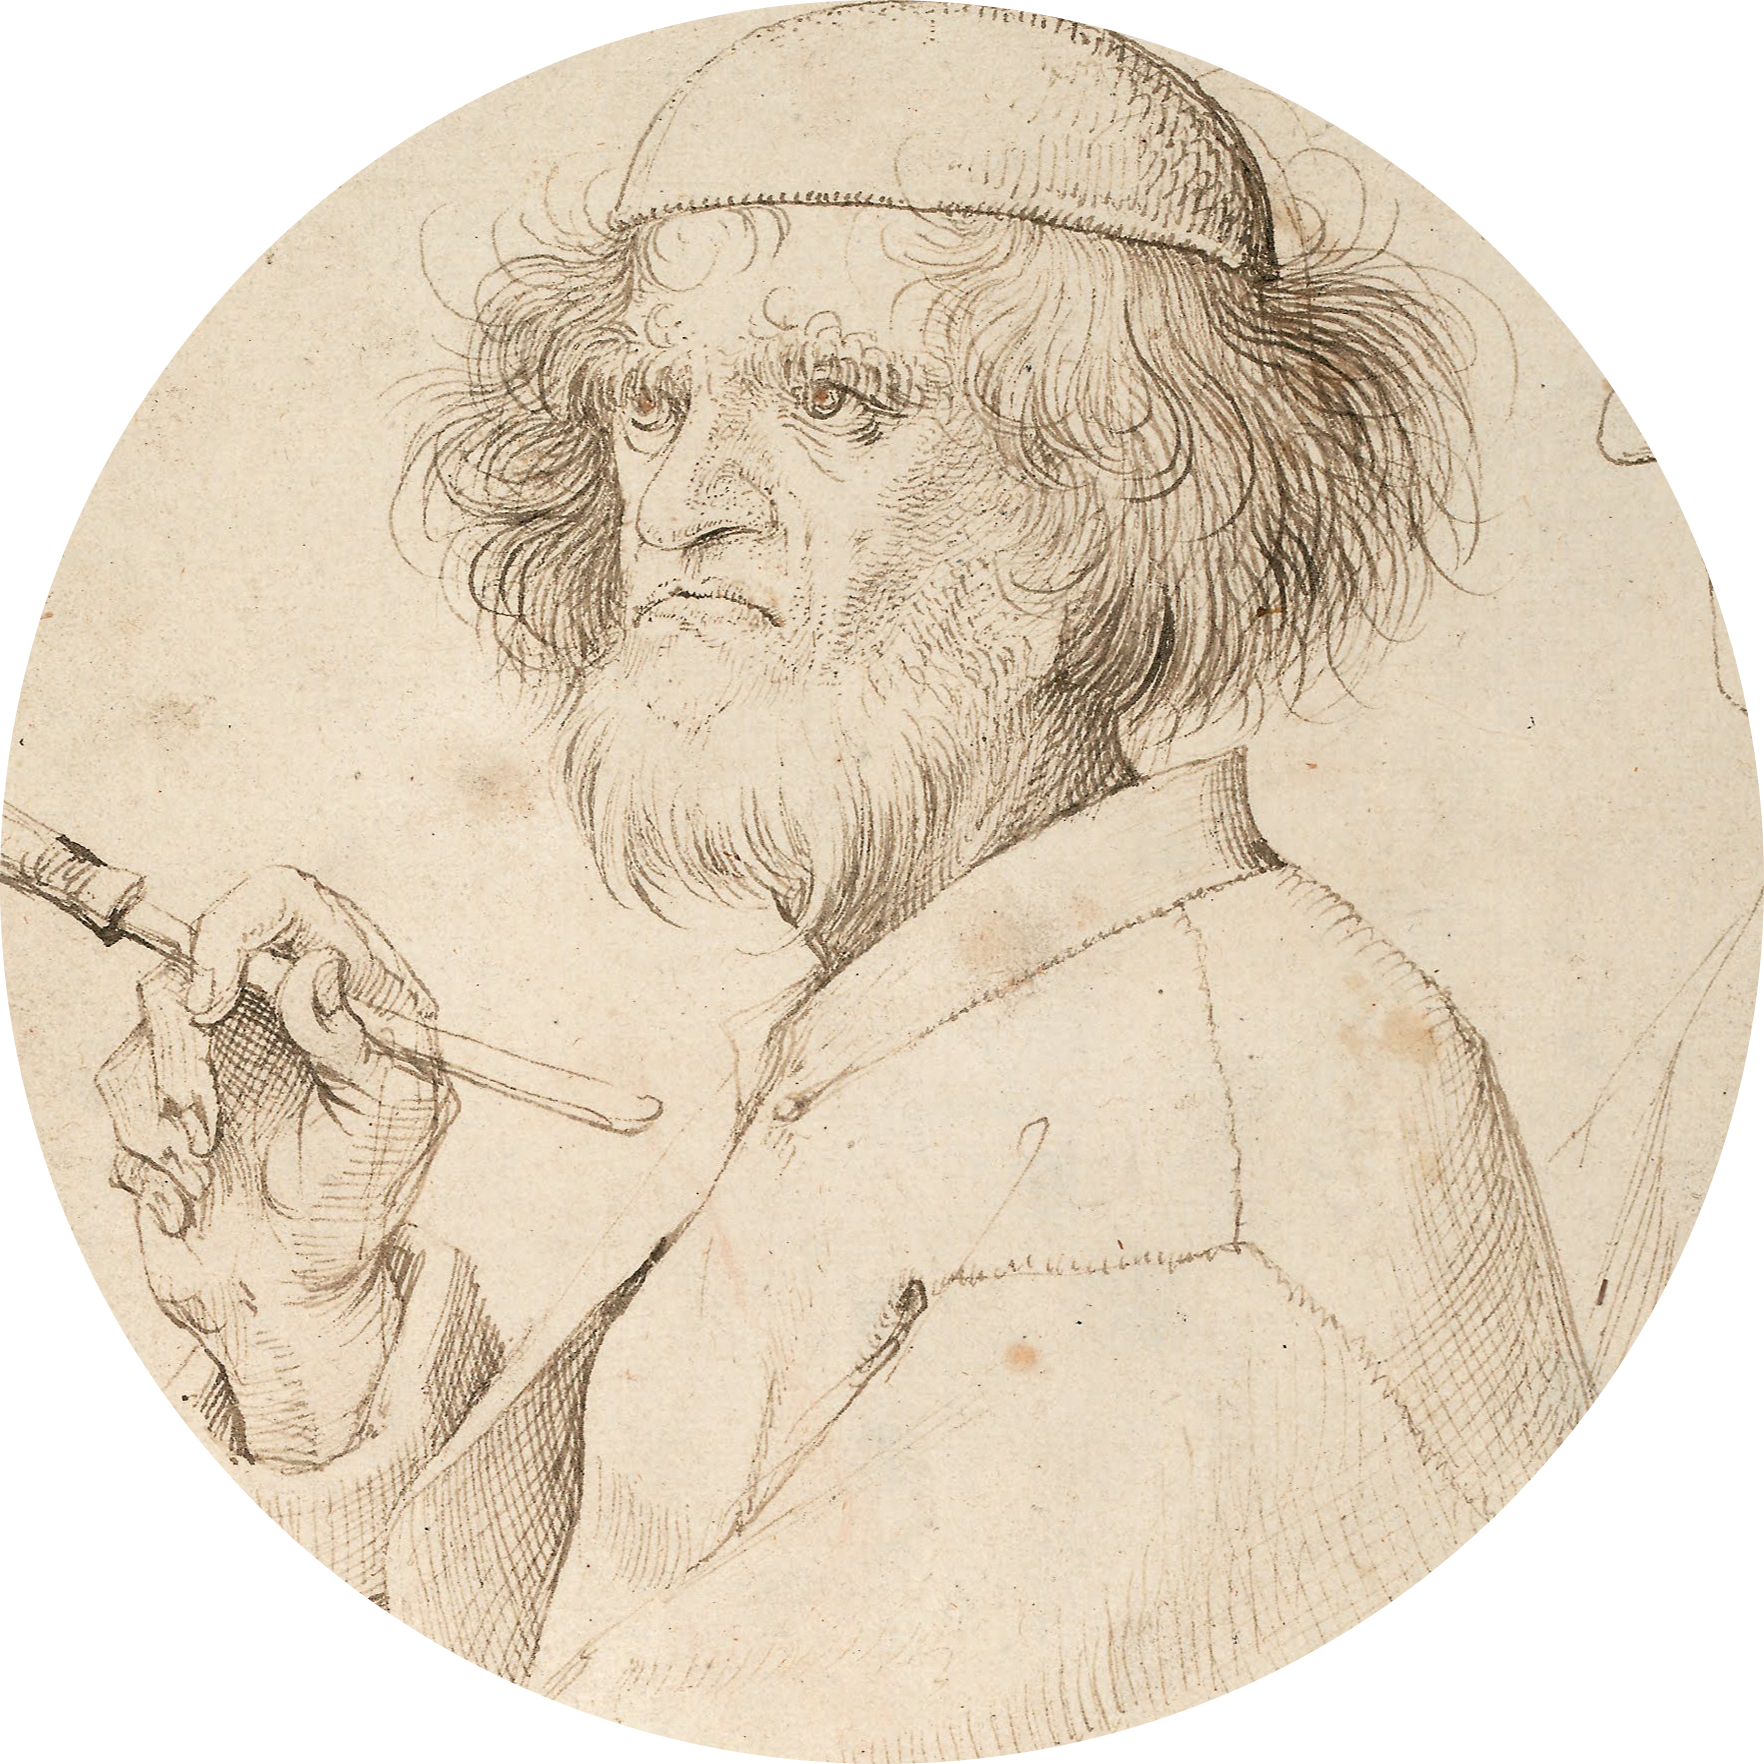 Jogos Infantis  Pieter Bruegel the Elder